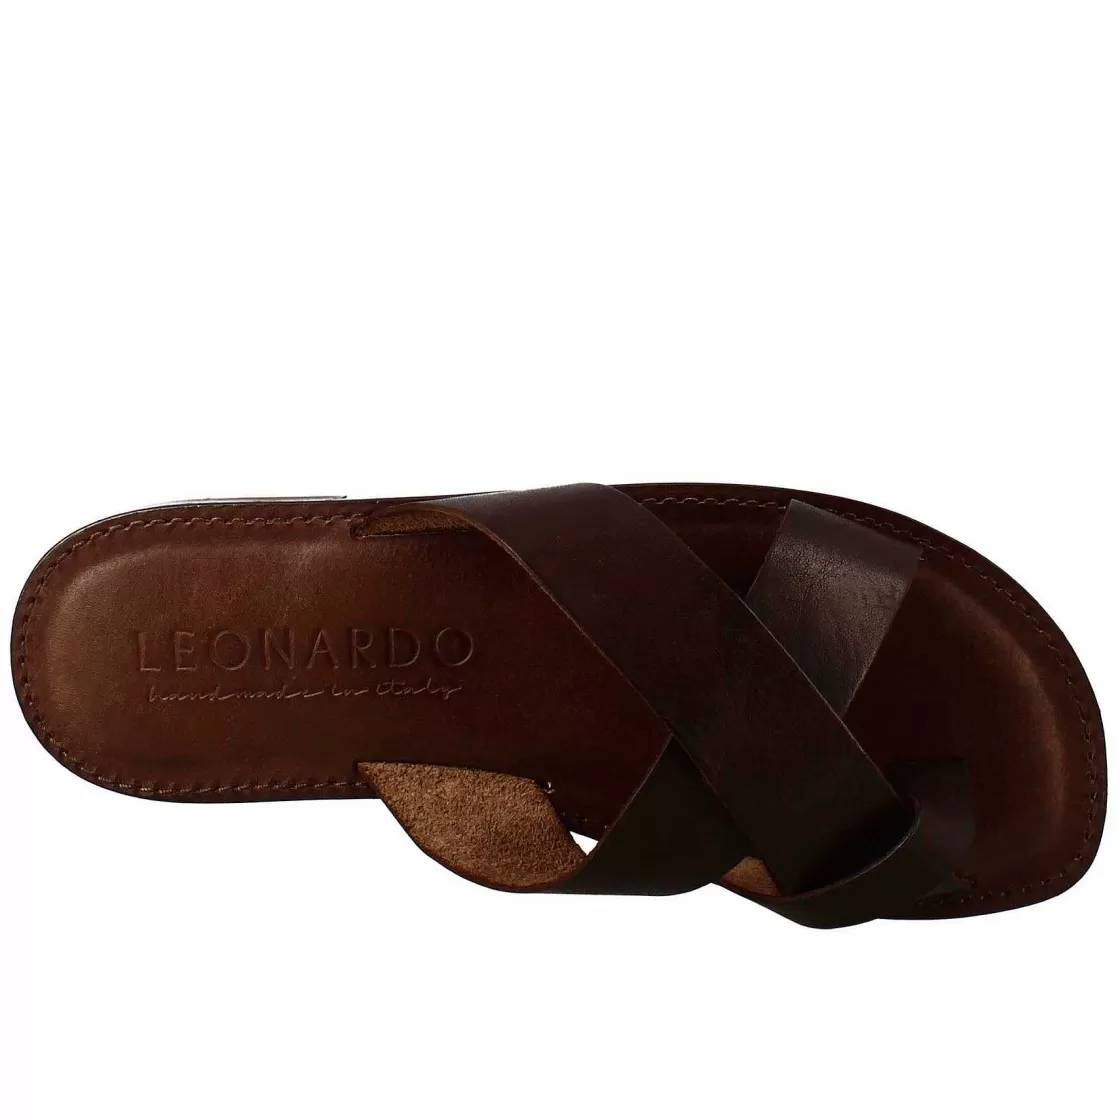 Leonardo Coffee Brown Leather Gladiator Sandals For Men New